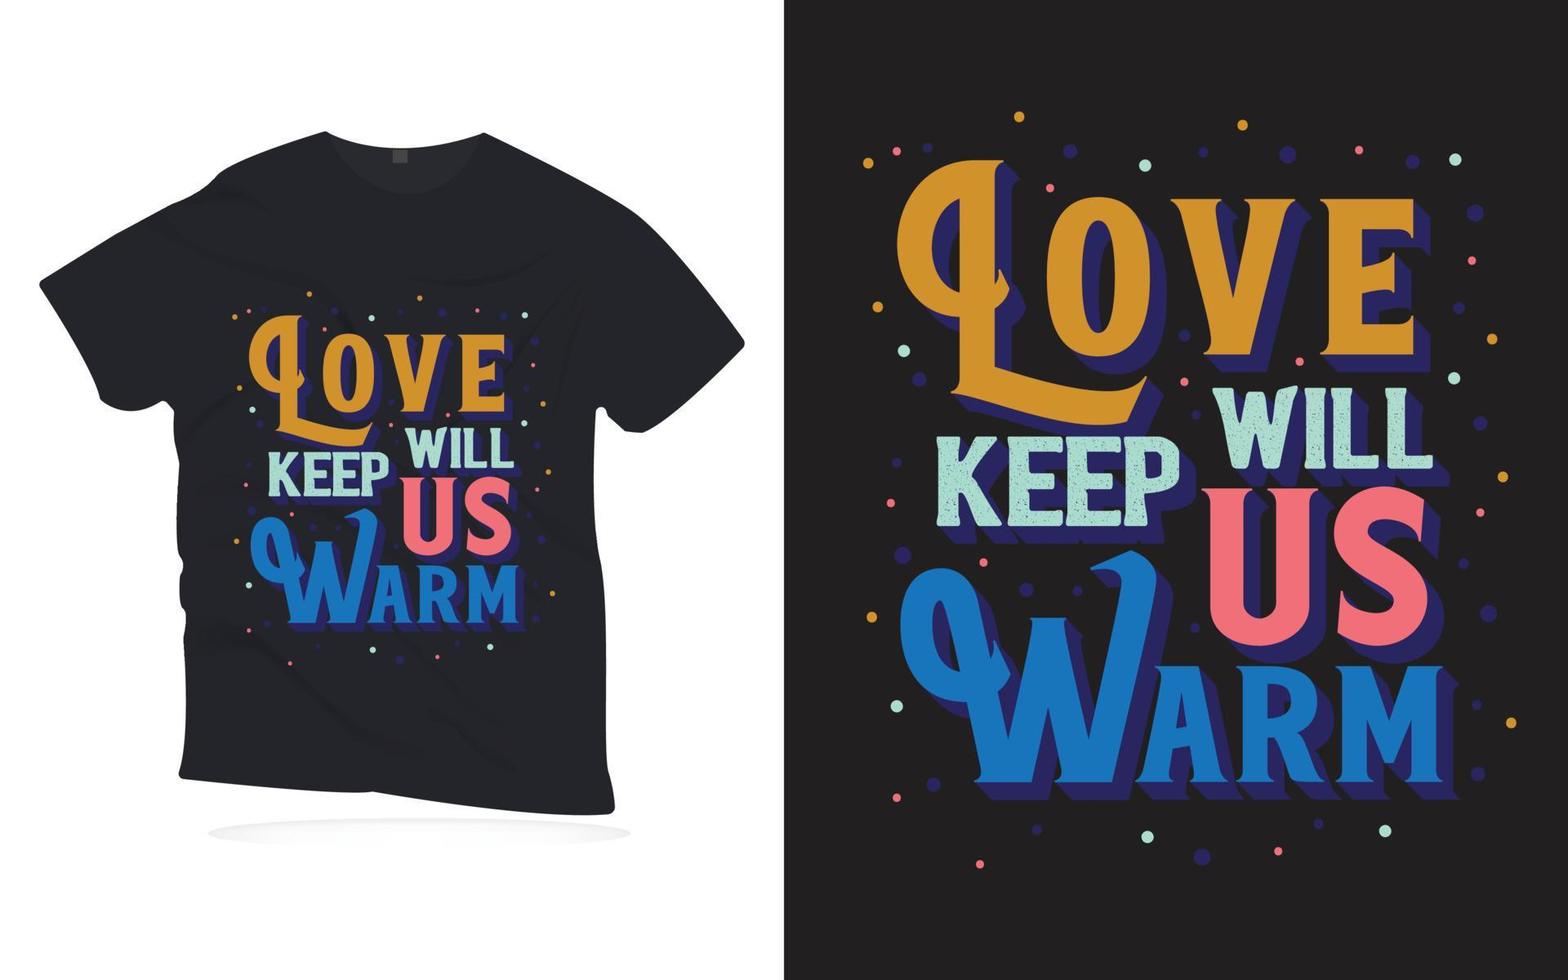 liefde zal ons warm houden. motiverende citaten belettering t-shirt design. vector